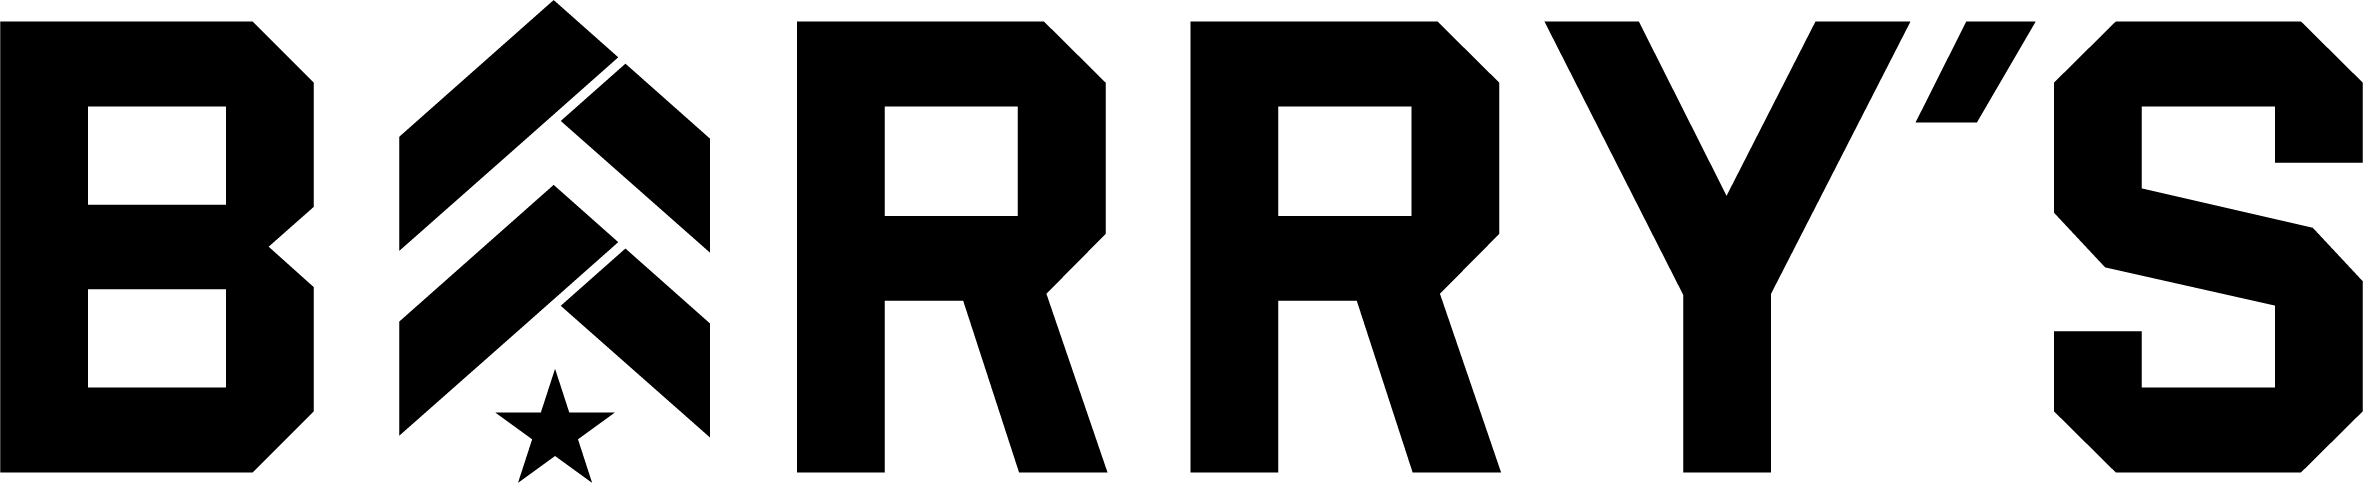 Barry_Logo_black